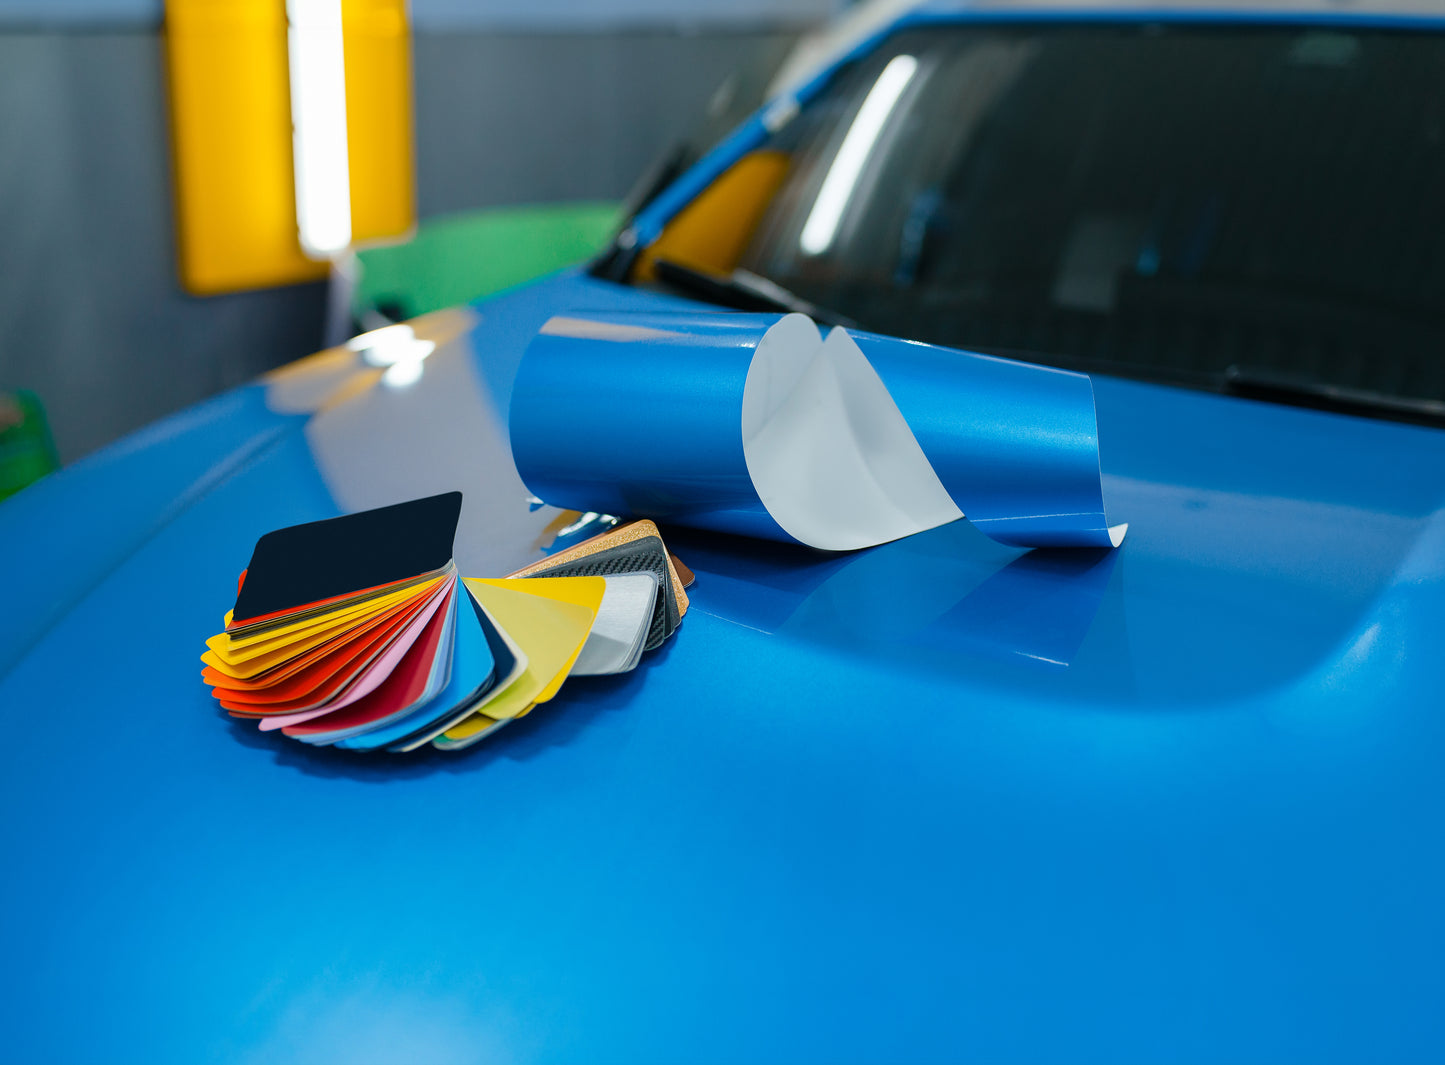 Carwrap Folie - Föhnbare Wrap-folie für Fahrzeuge